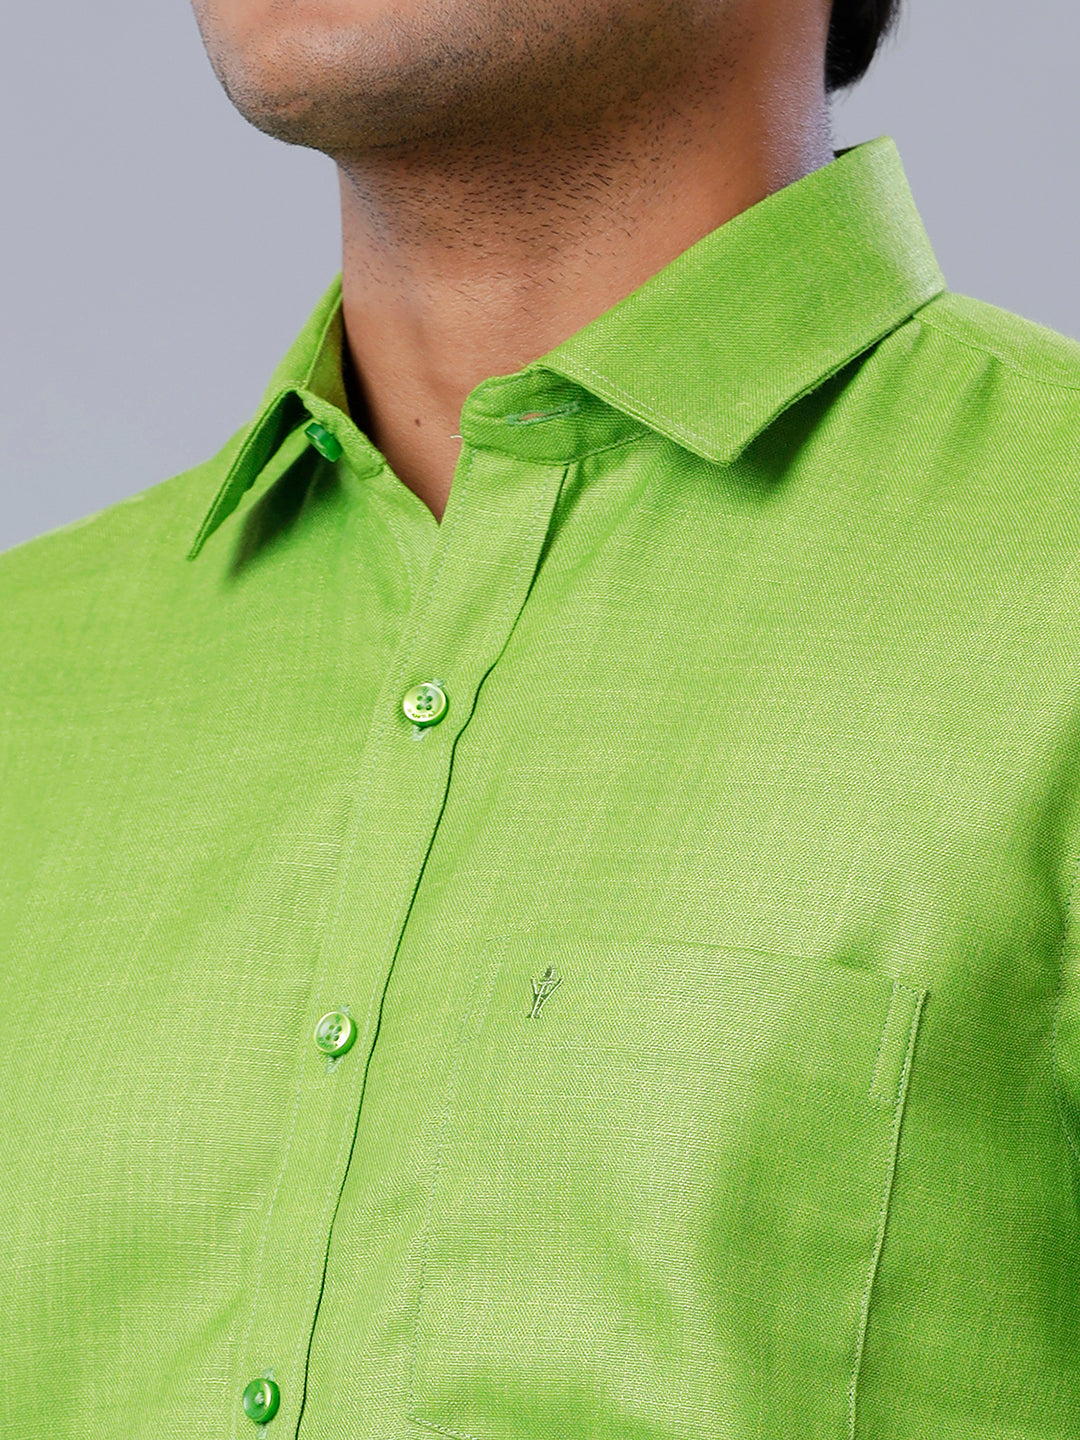 Mens Formal Shirt Half Sleeves Parrot Green T41 TQ8-Zoom view